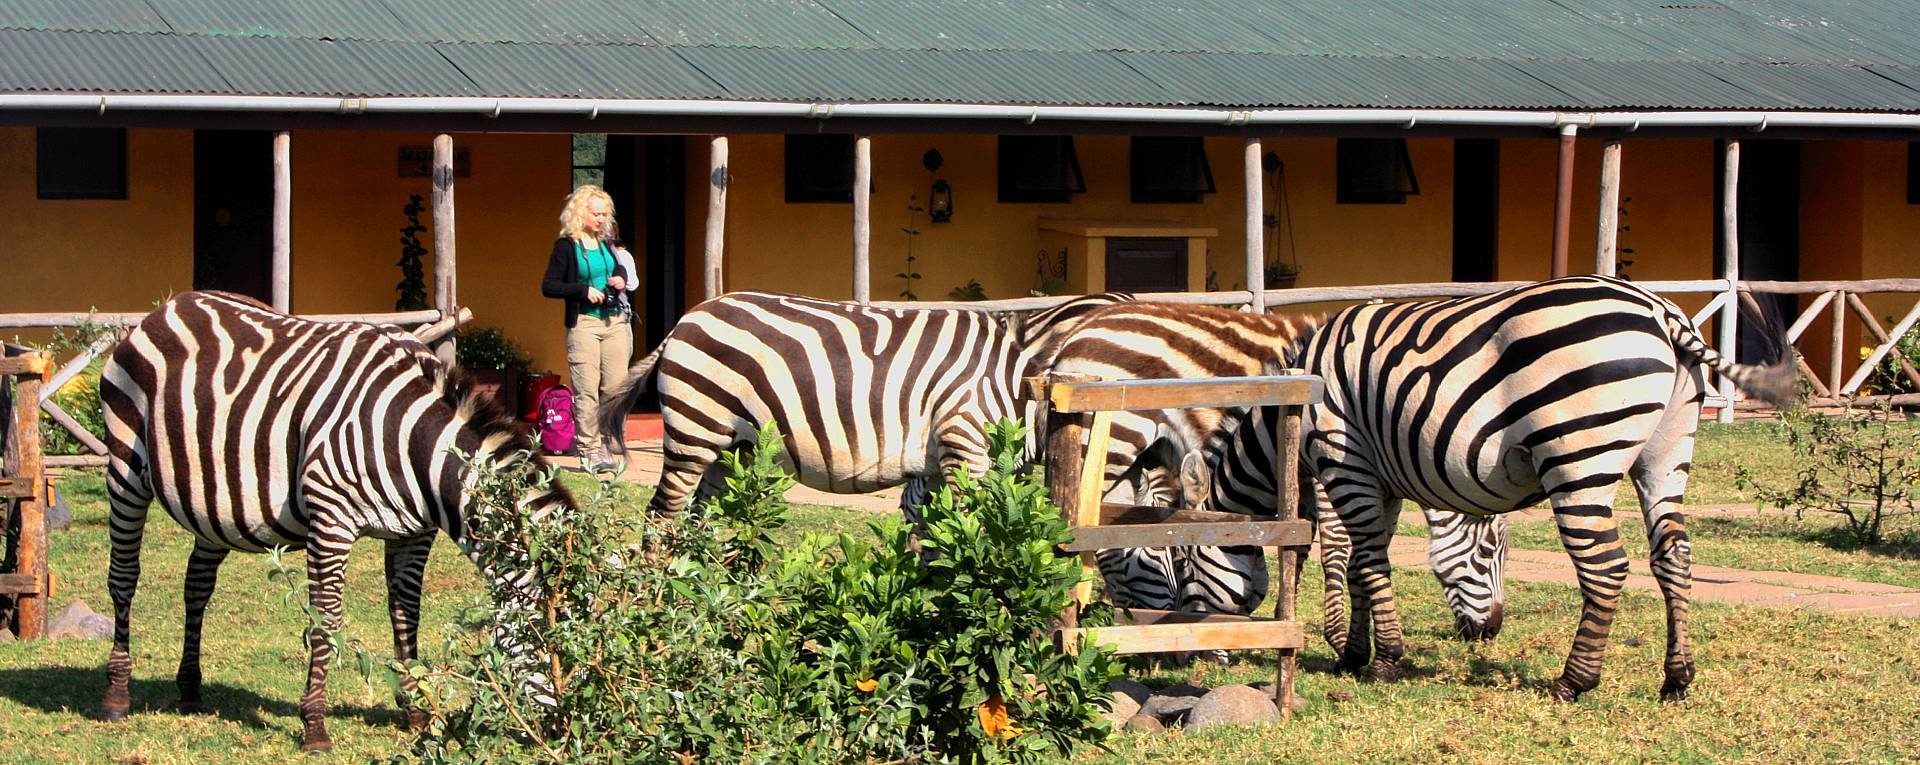 Ngorongoro Rhino Lodge Zebras